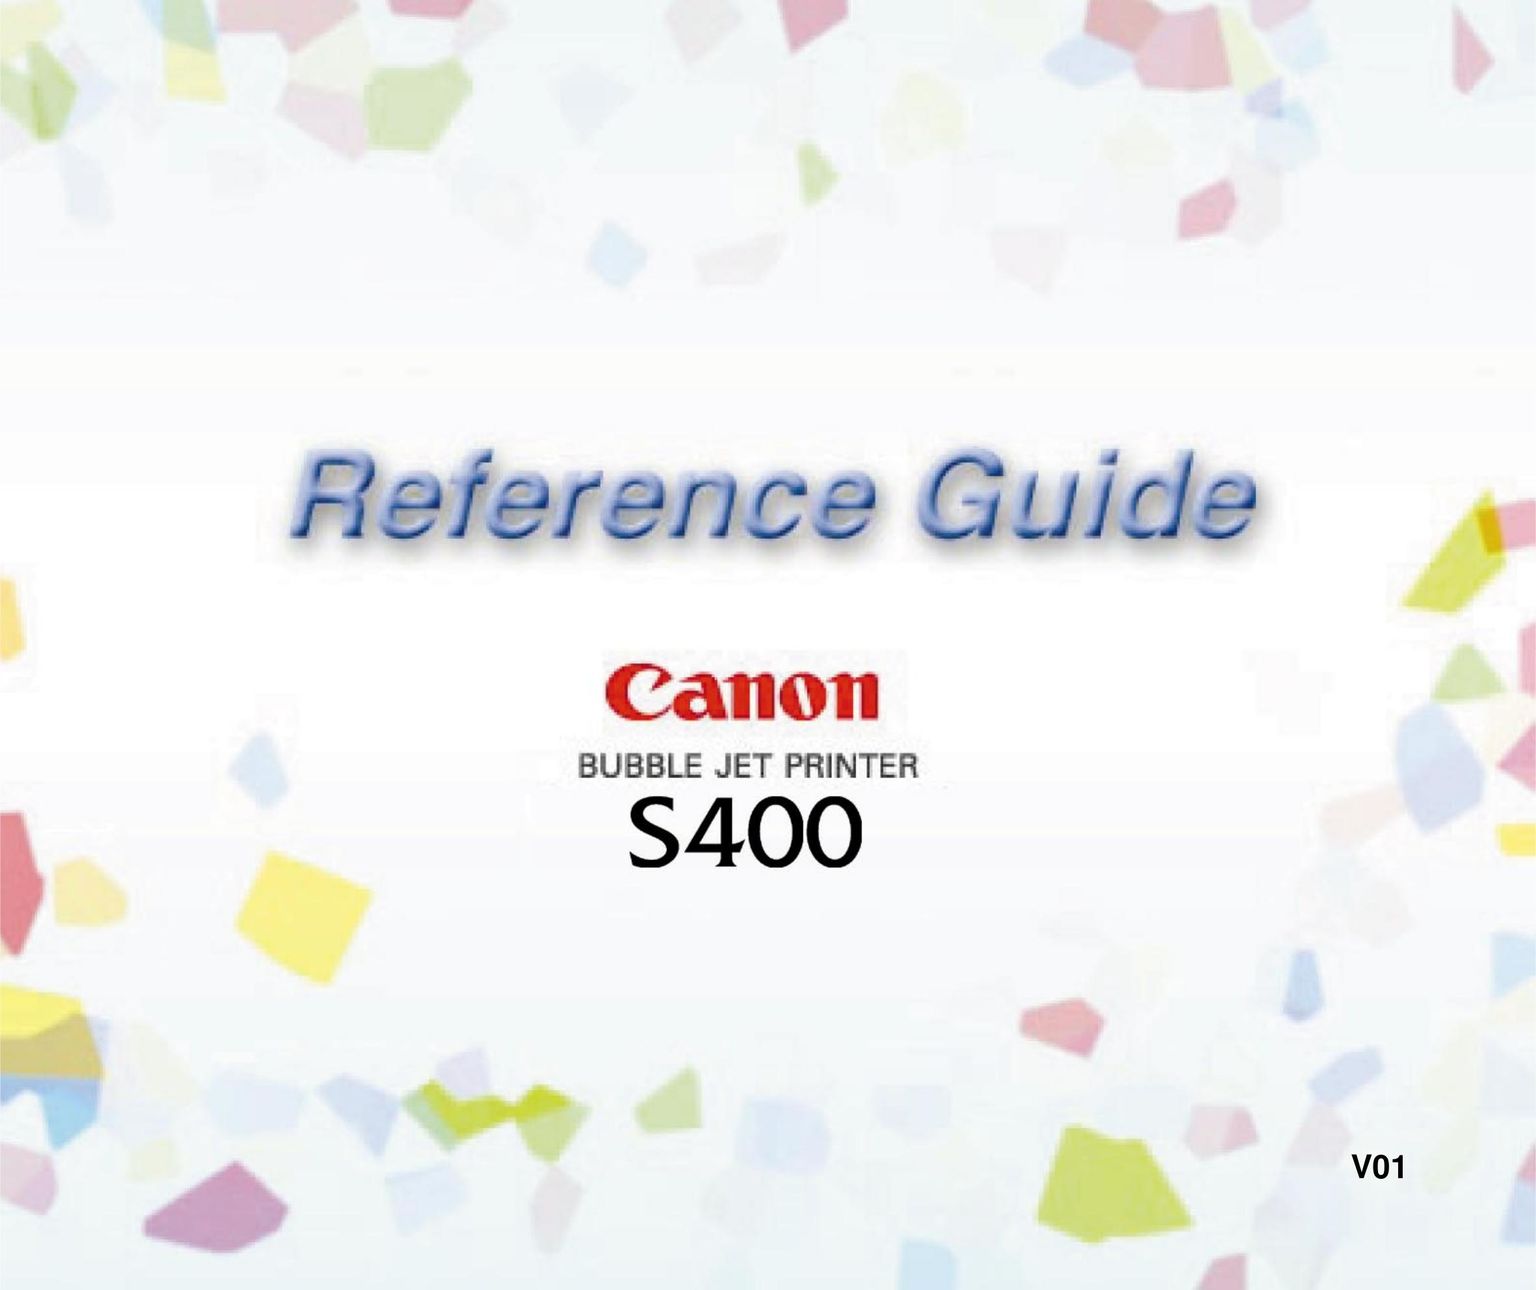 Canon 400 Printer User Manual